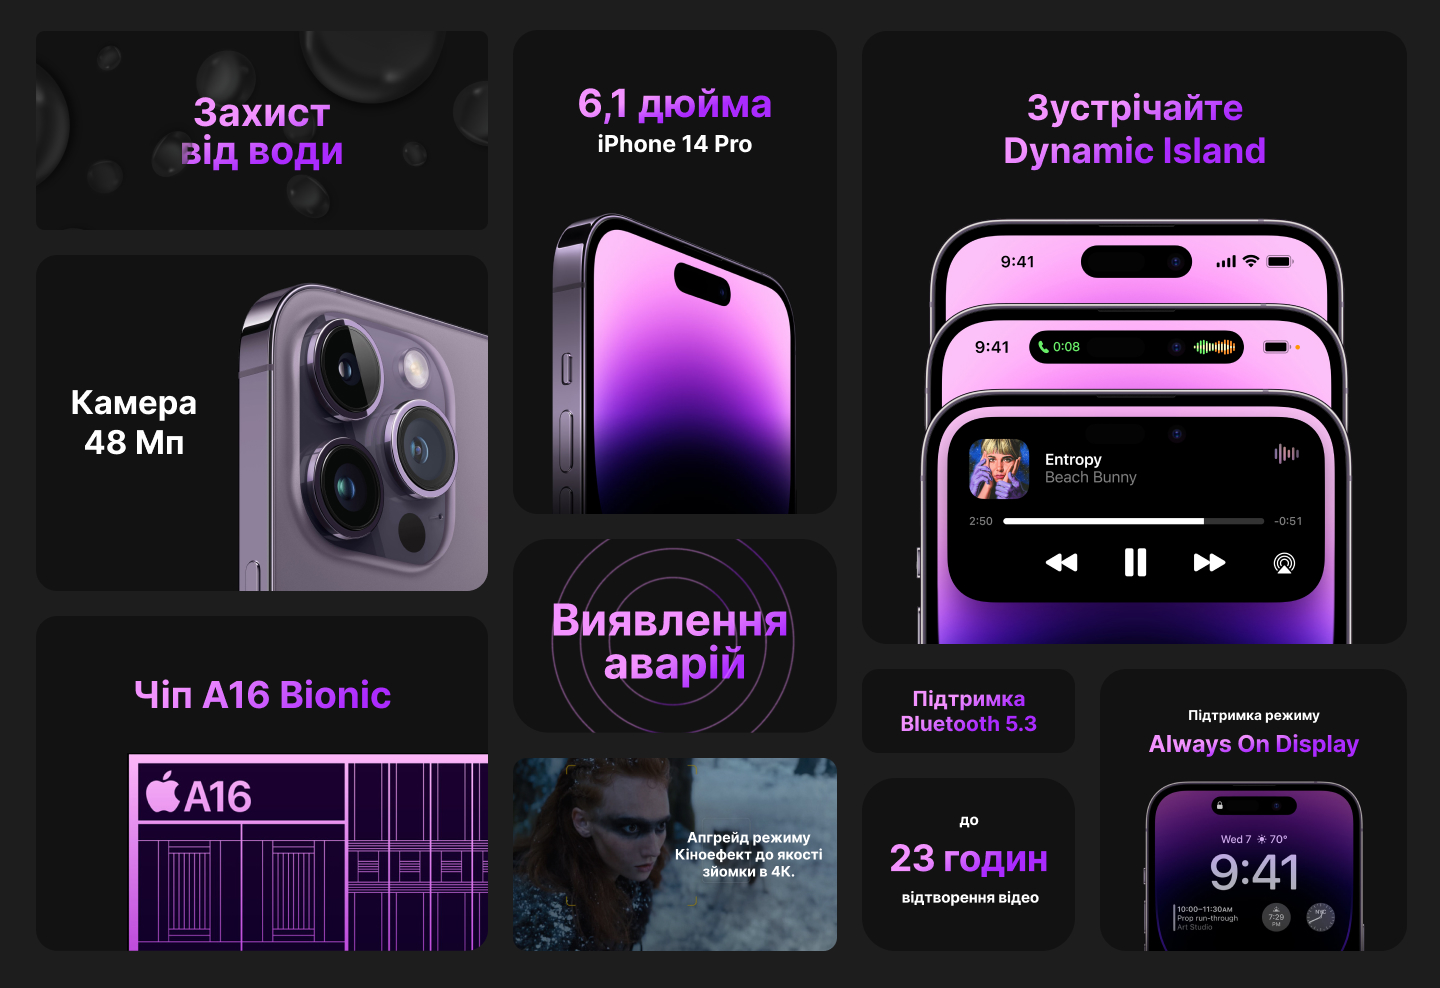 Apple iPhone 14 Pro 512GB (Deep Purple)